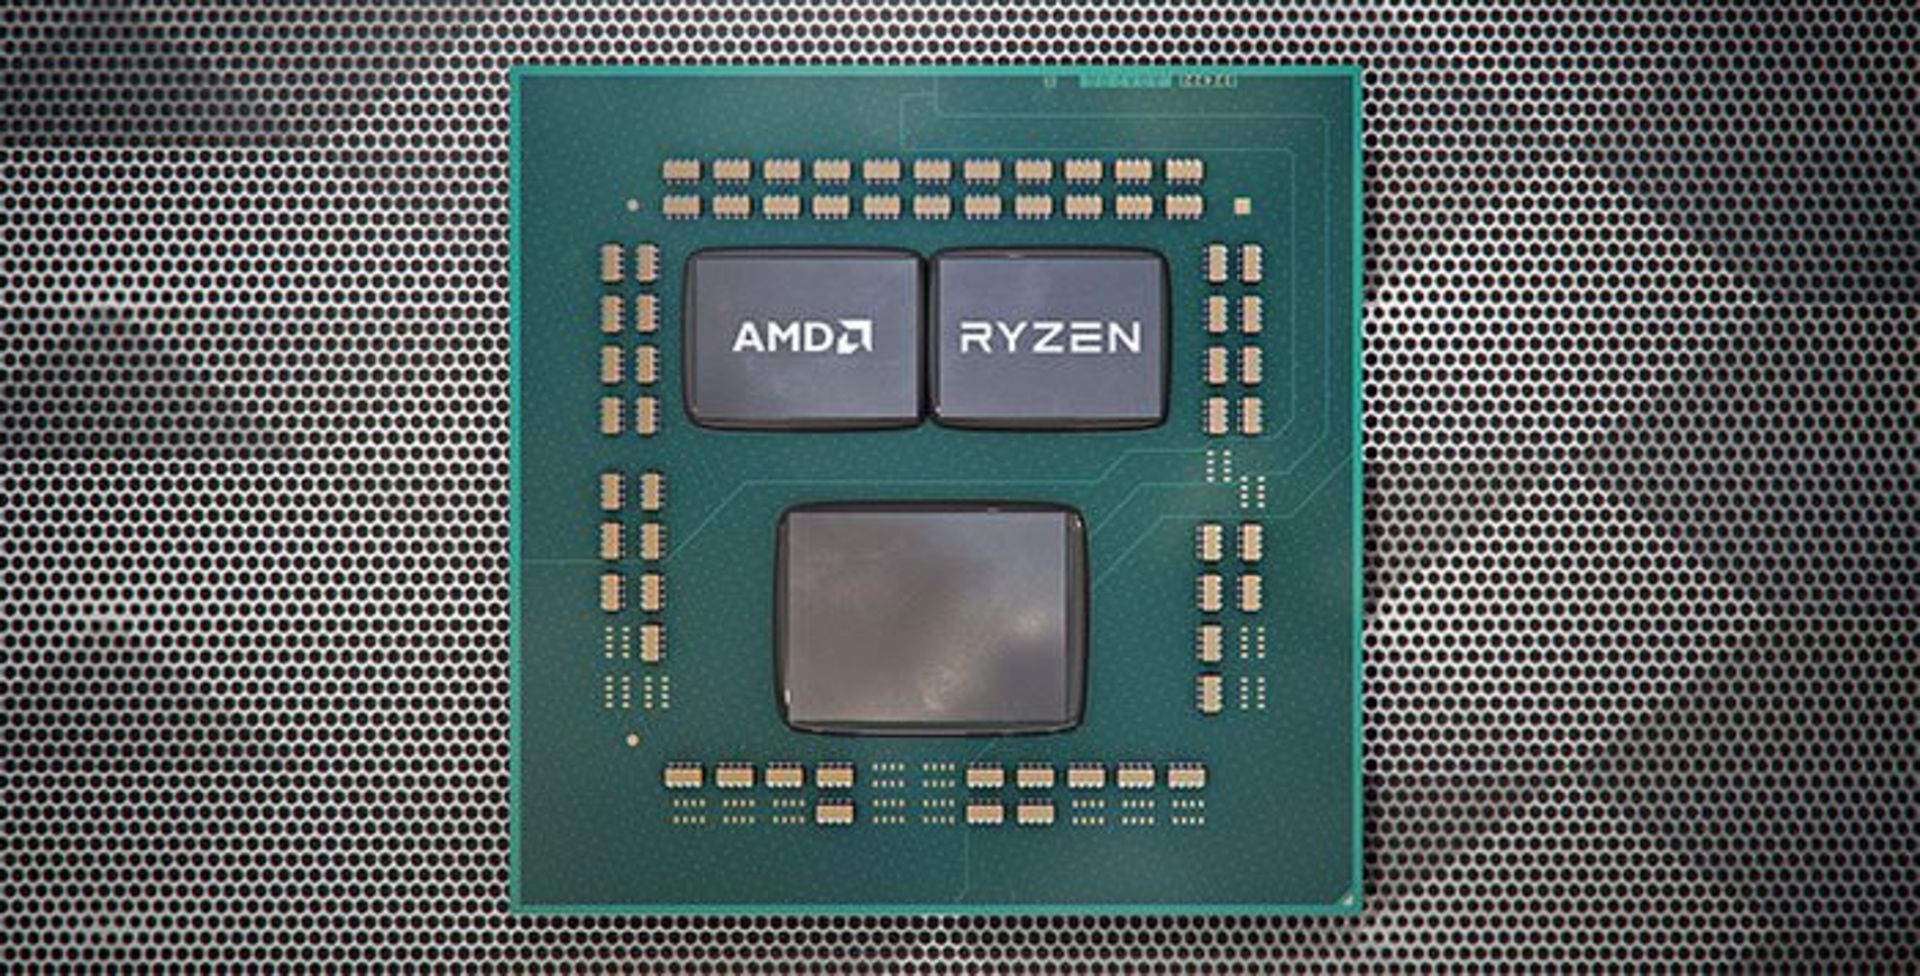 مرجع متخصصين ايران اي ام دي رايزن ۳۰۰۰ / AMD ryzen 3000